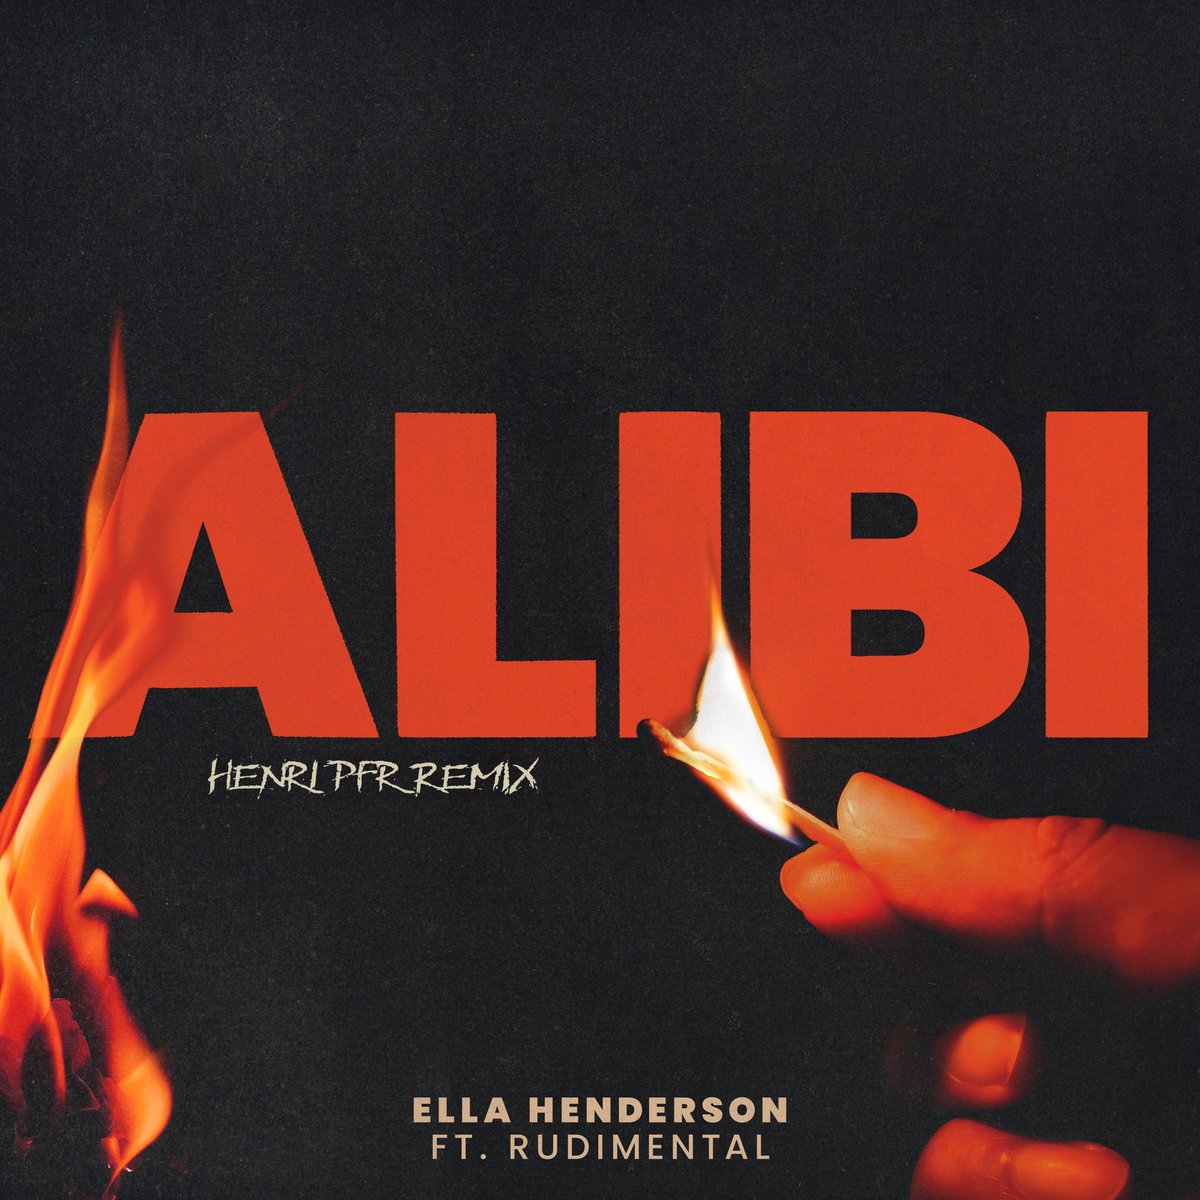 @EllaHenderson - Alibi (@HenriPfr Remix)